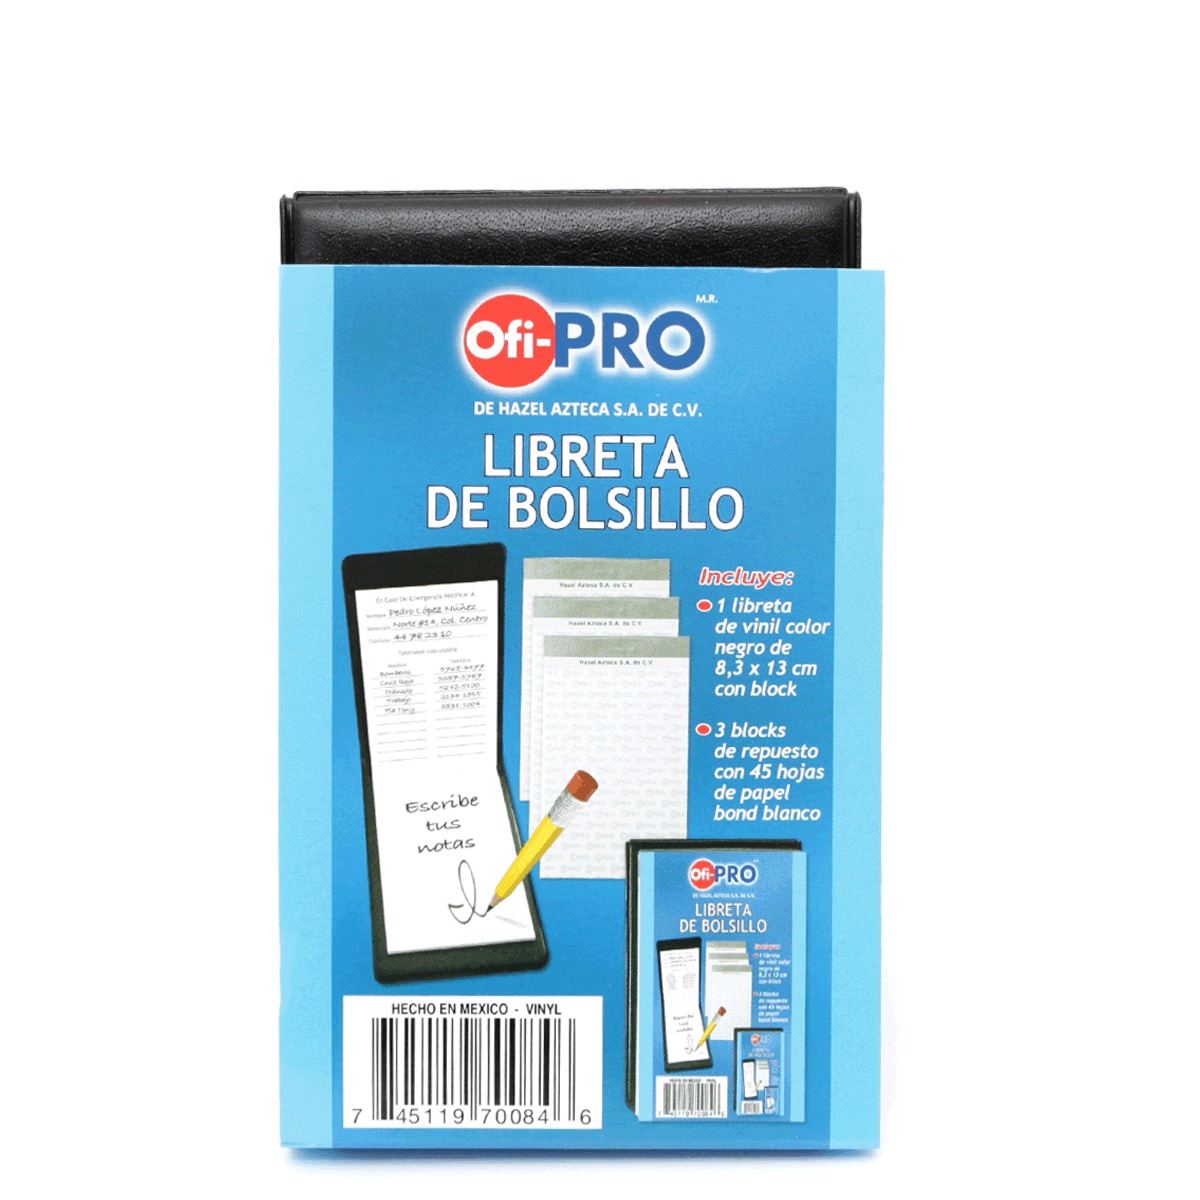 Libreta de Bolsillo Ofi-Pro Blanco 180 hojas | Office Depot Mexico